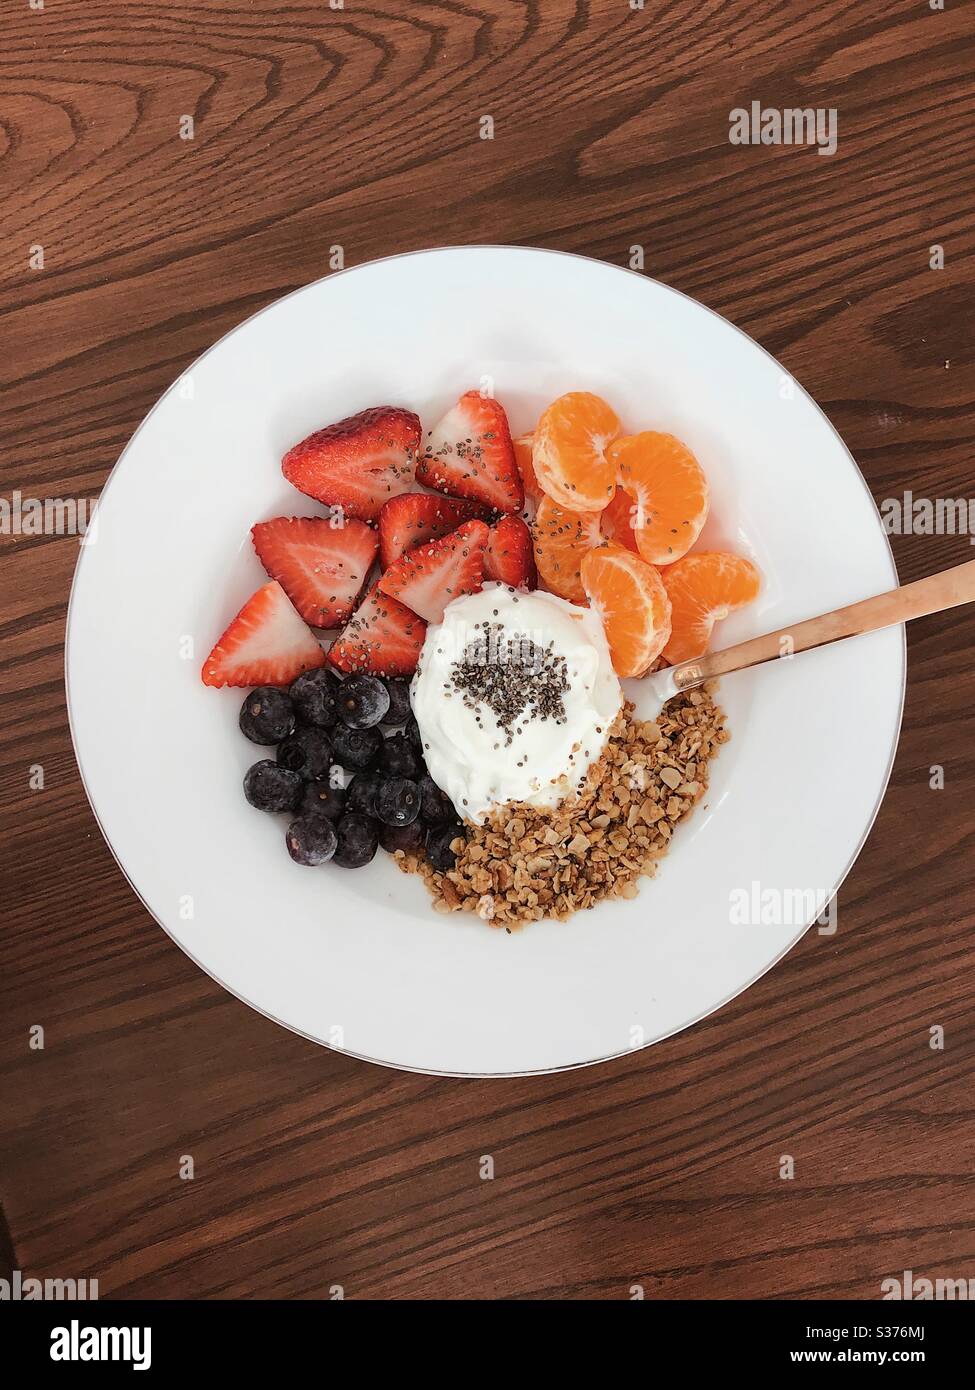 Fruit and yogurt, healthy breakfast Stock Photo